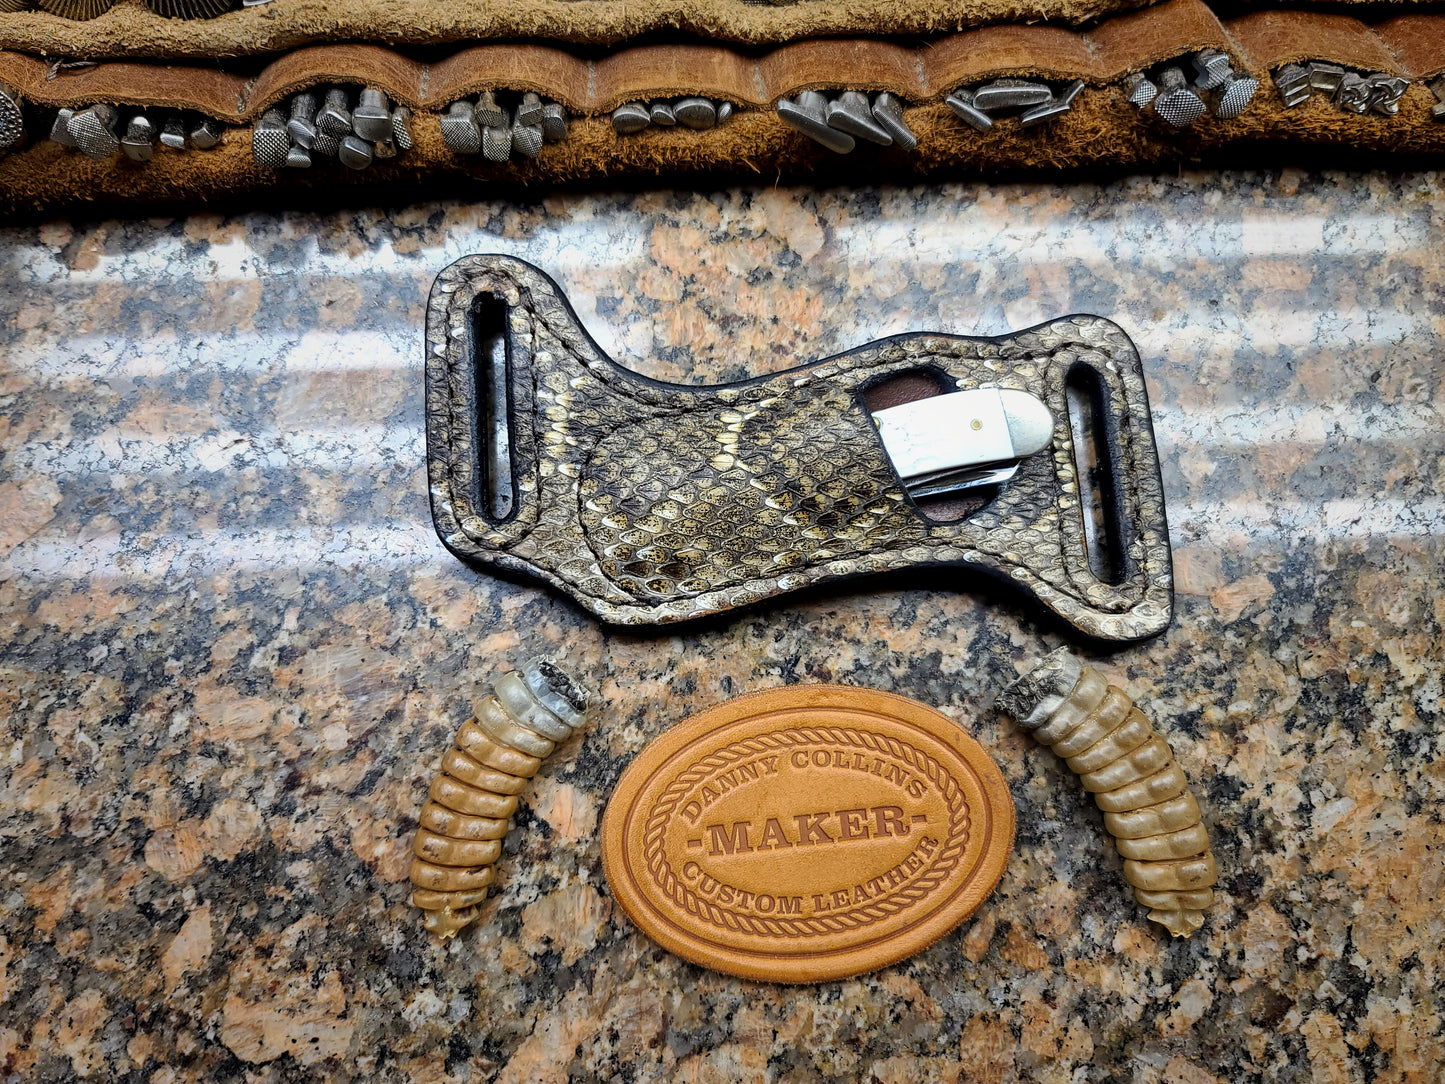 Case Mini Trapper sheath, Rattlesnake Knife Sheath, Horizontal Knife Sheath